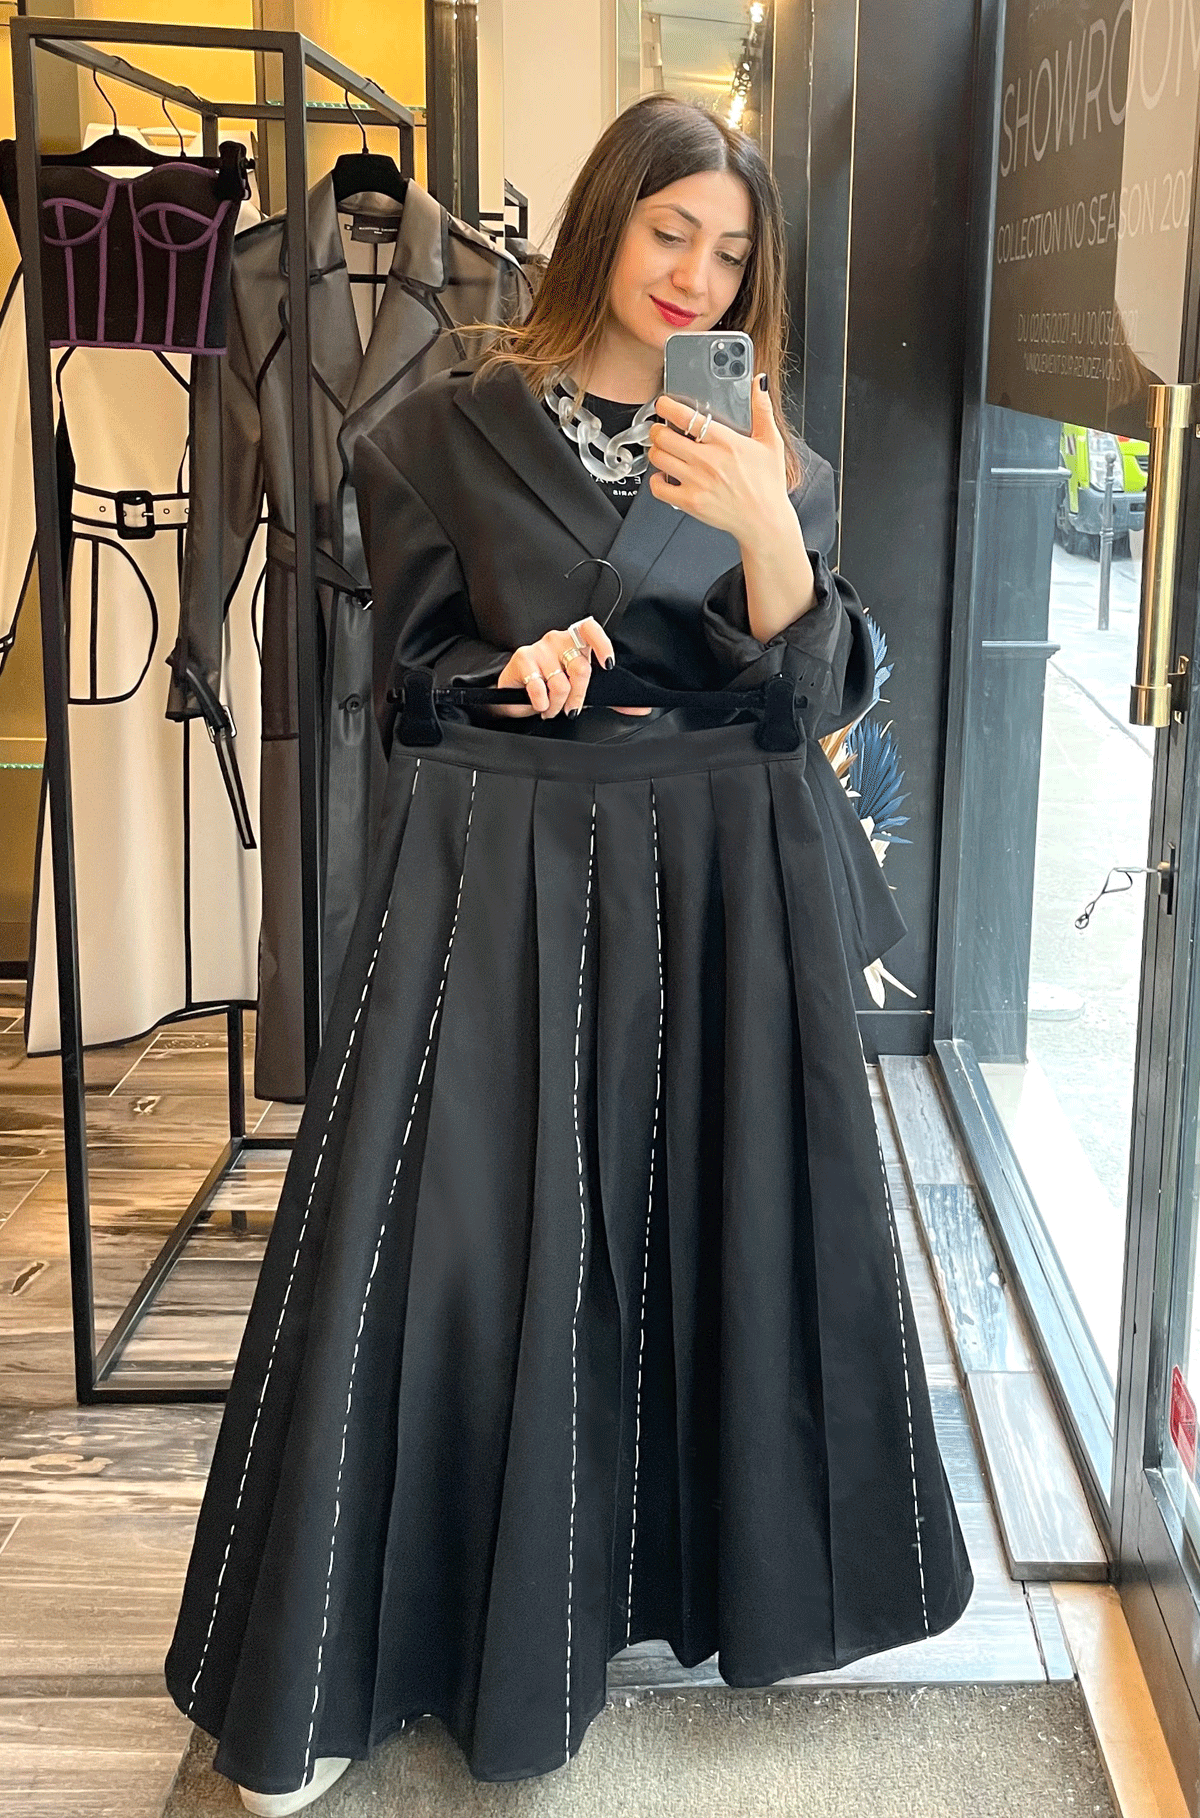 Sophie skirt black version for pre-order